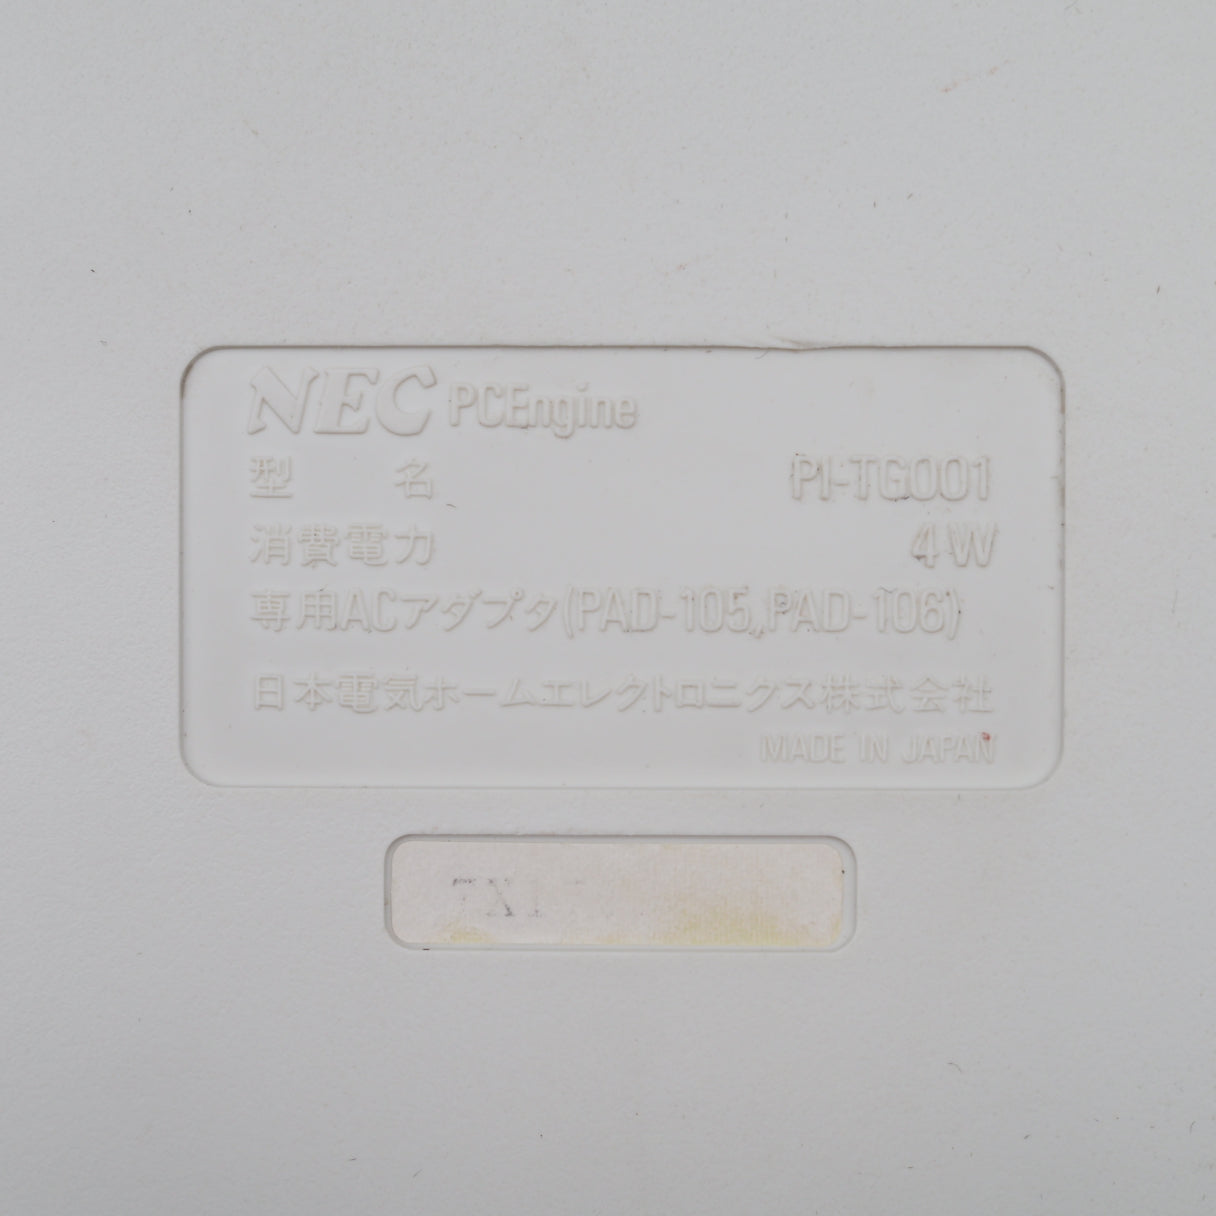 PC Engine Console system PI-TG001 No.2